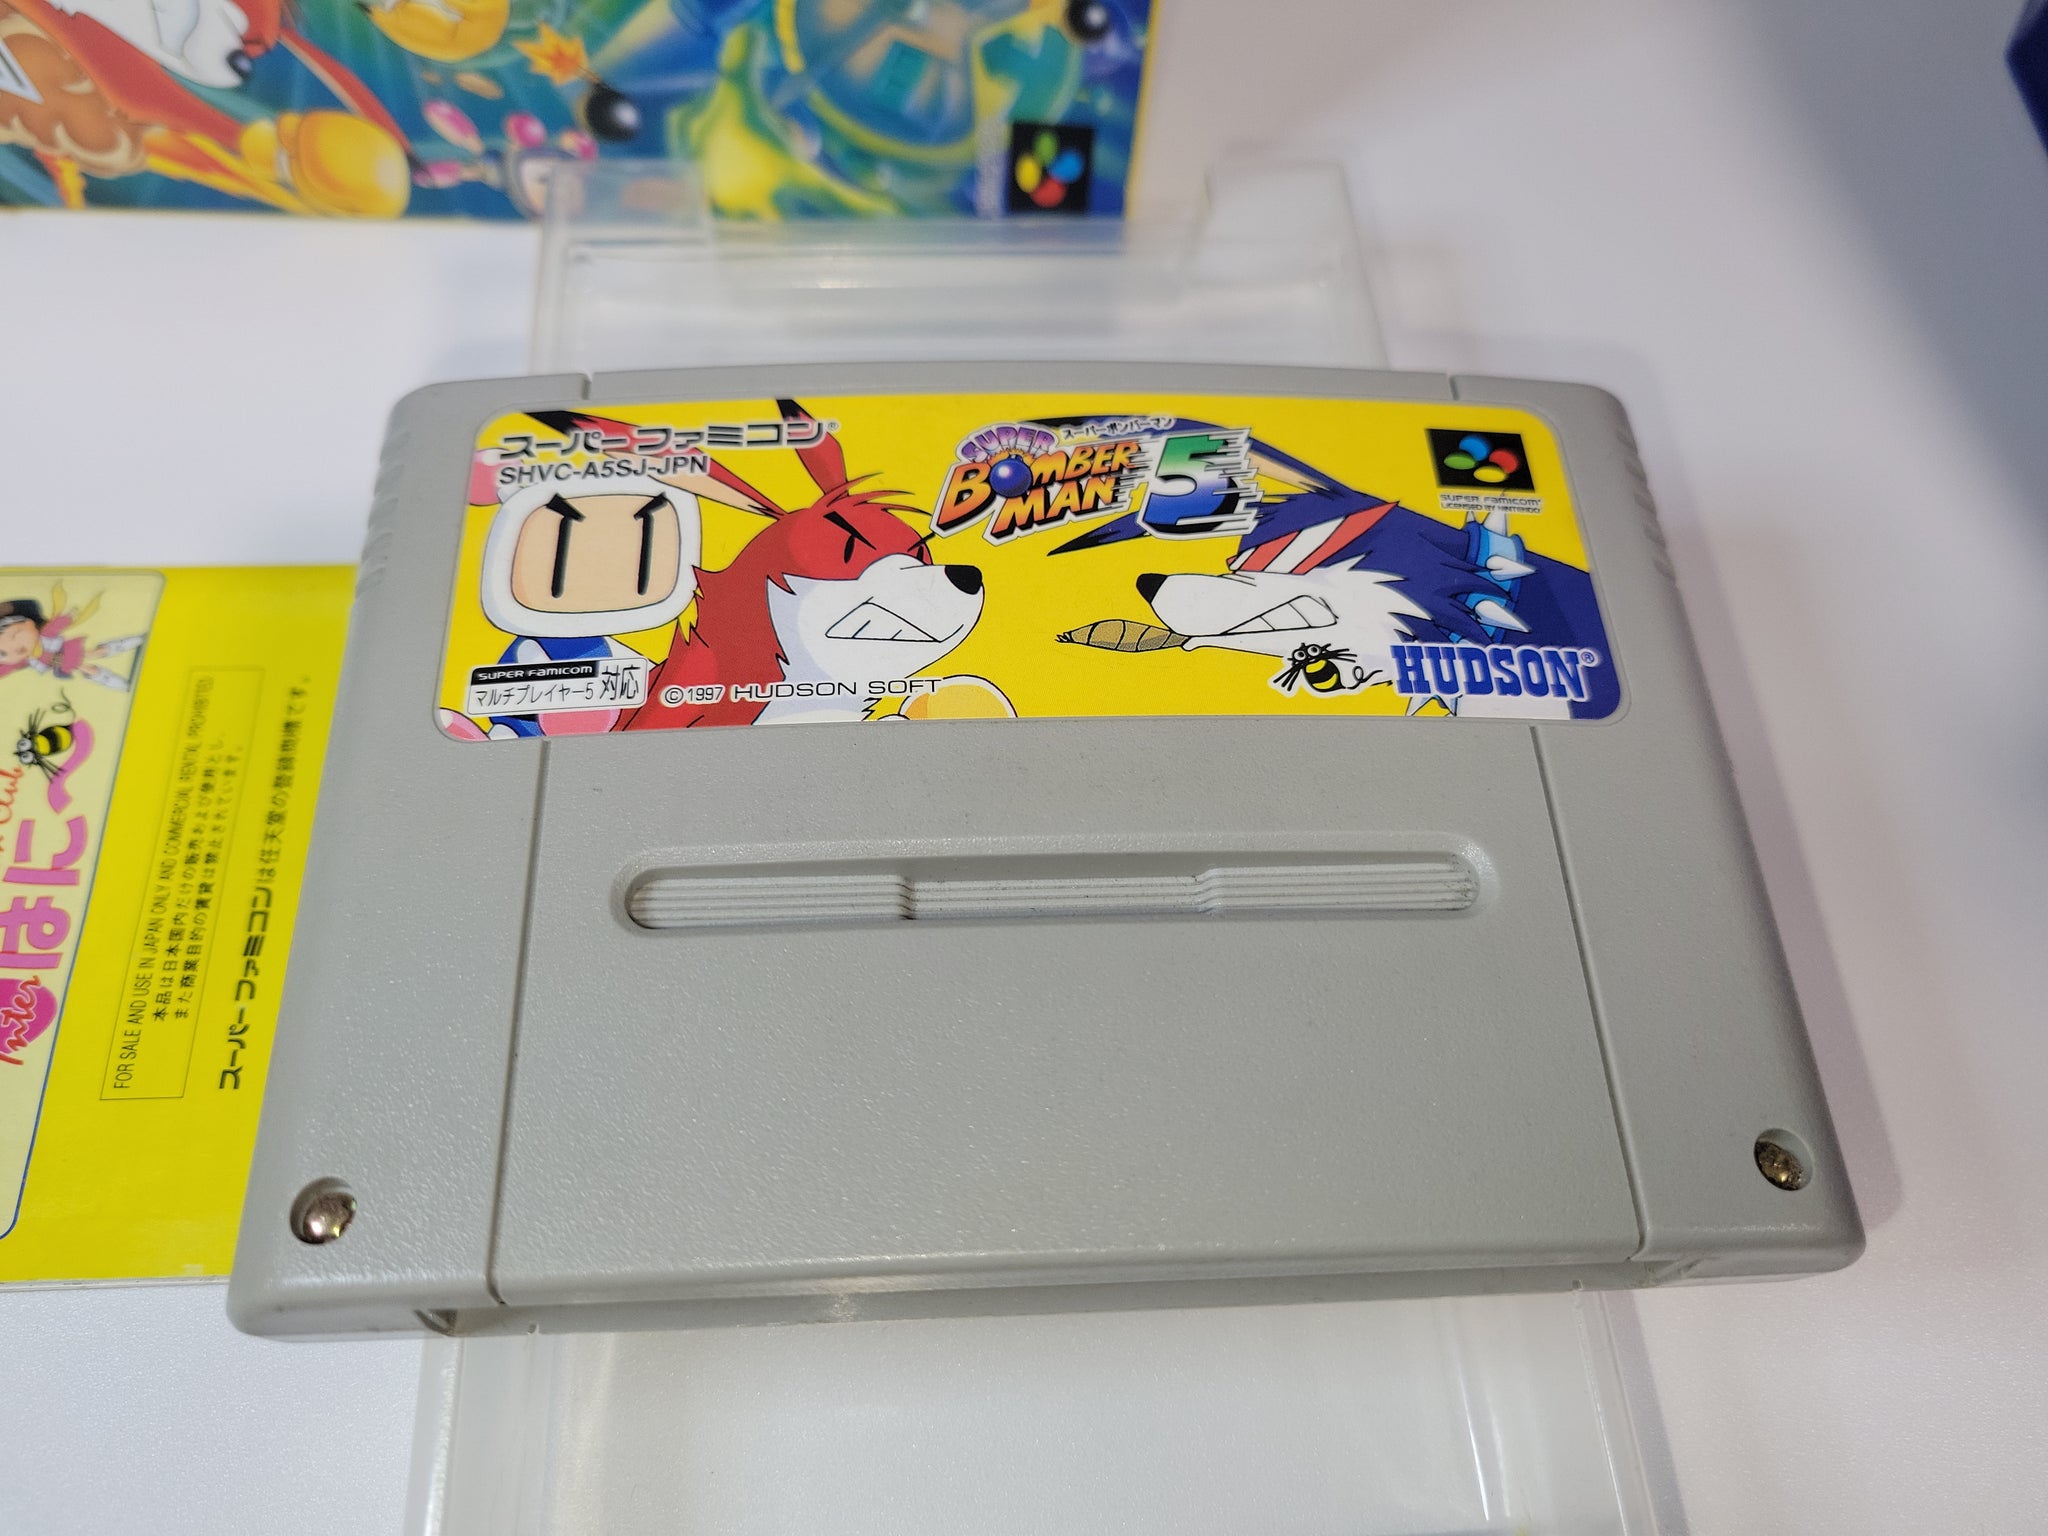 Super Bomberman 5 (SNES) - online game